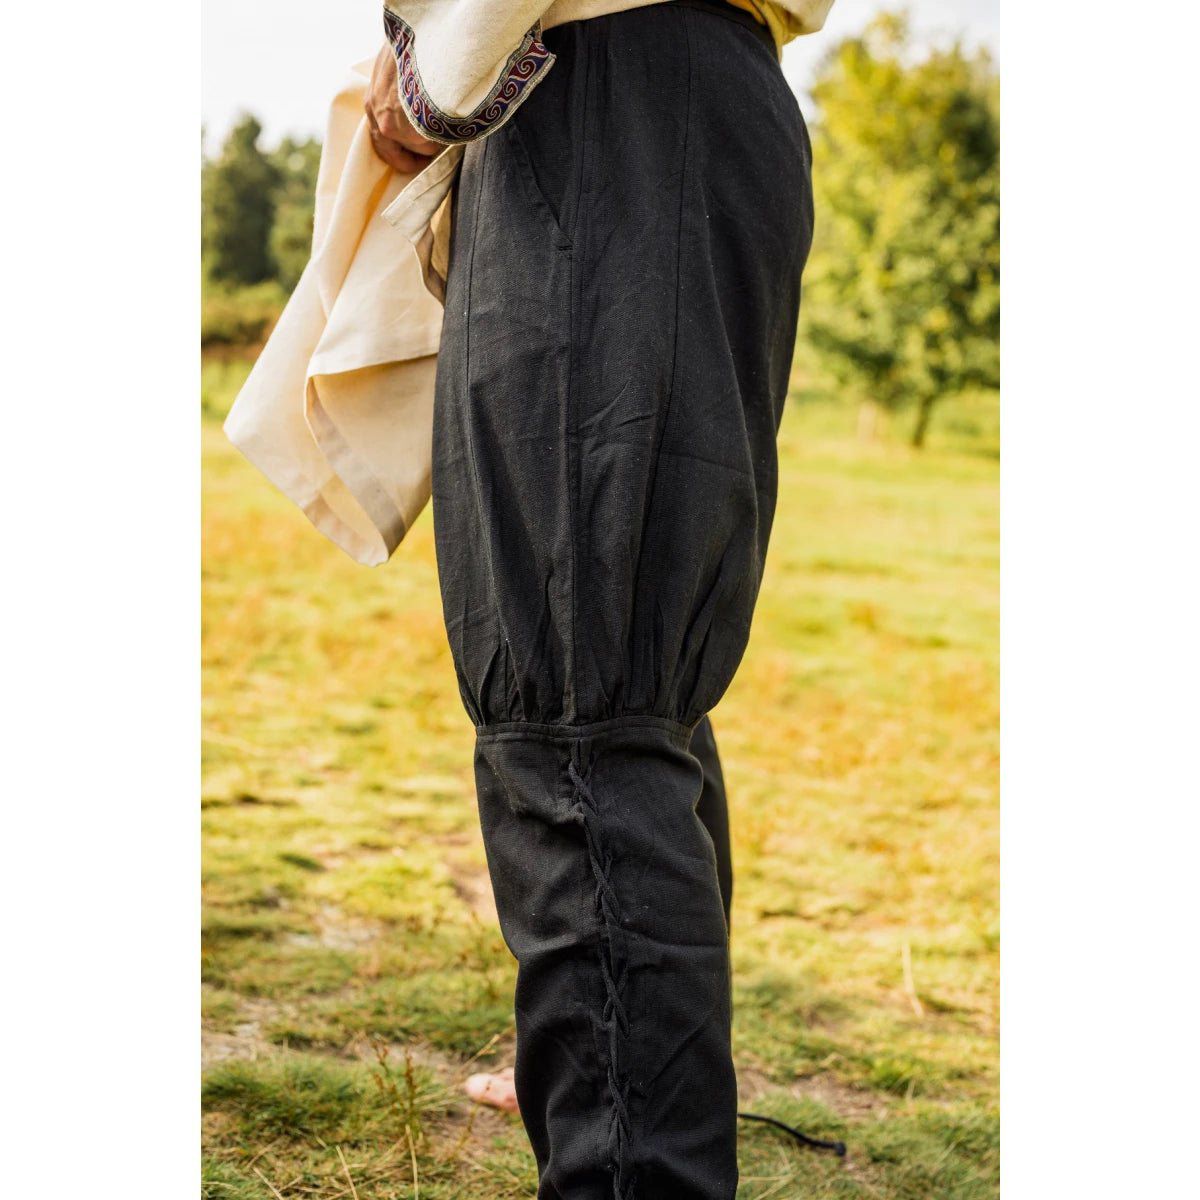 Viking Pirate Pants Trousers (Black, Brown) - 4575 – Inter-Moden California